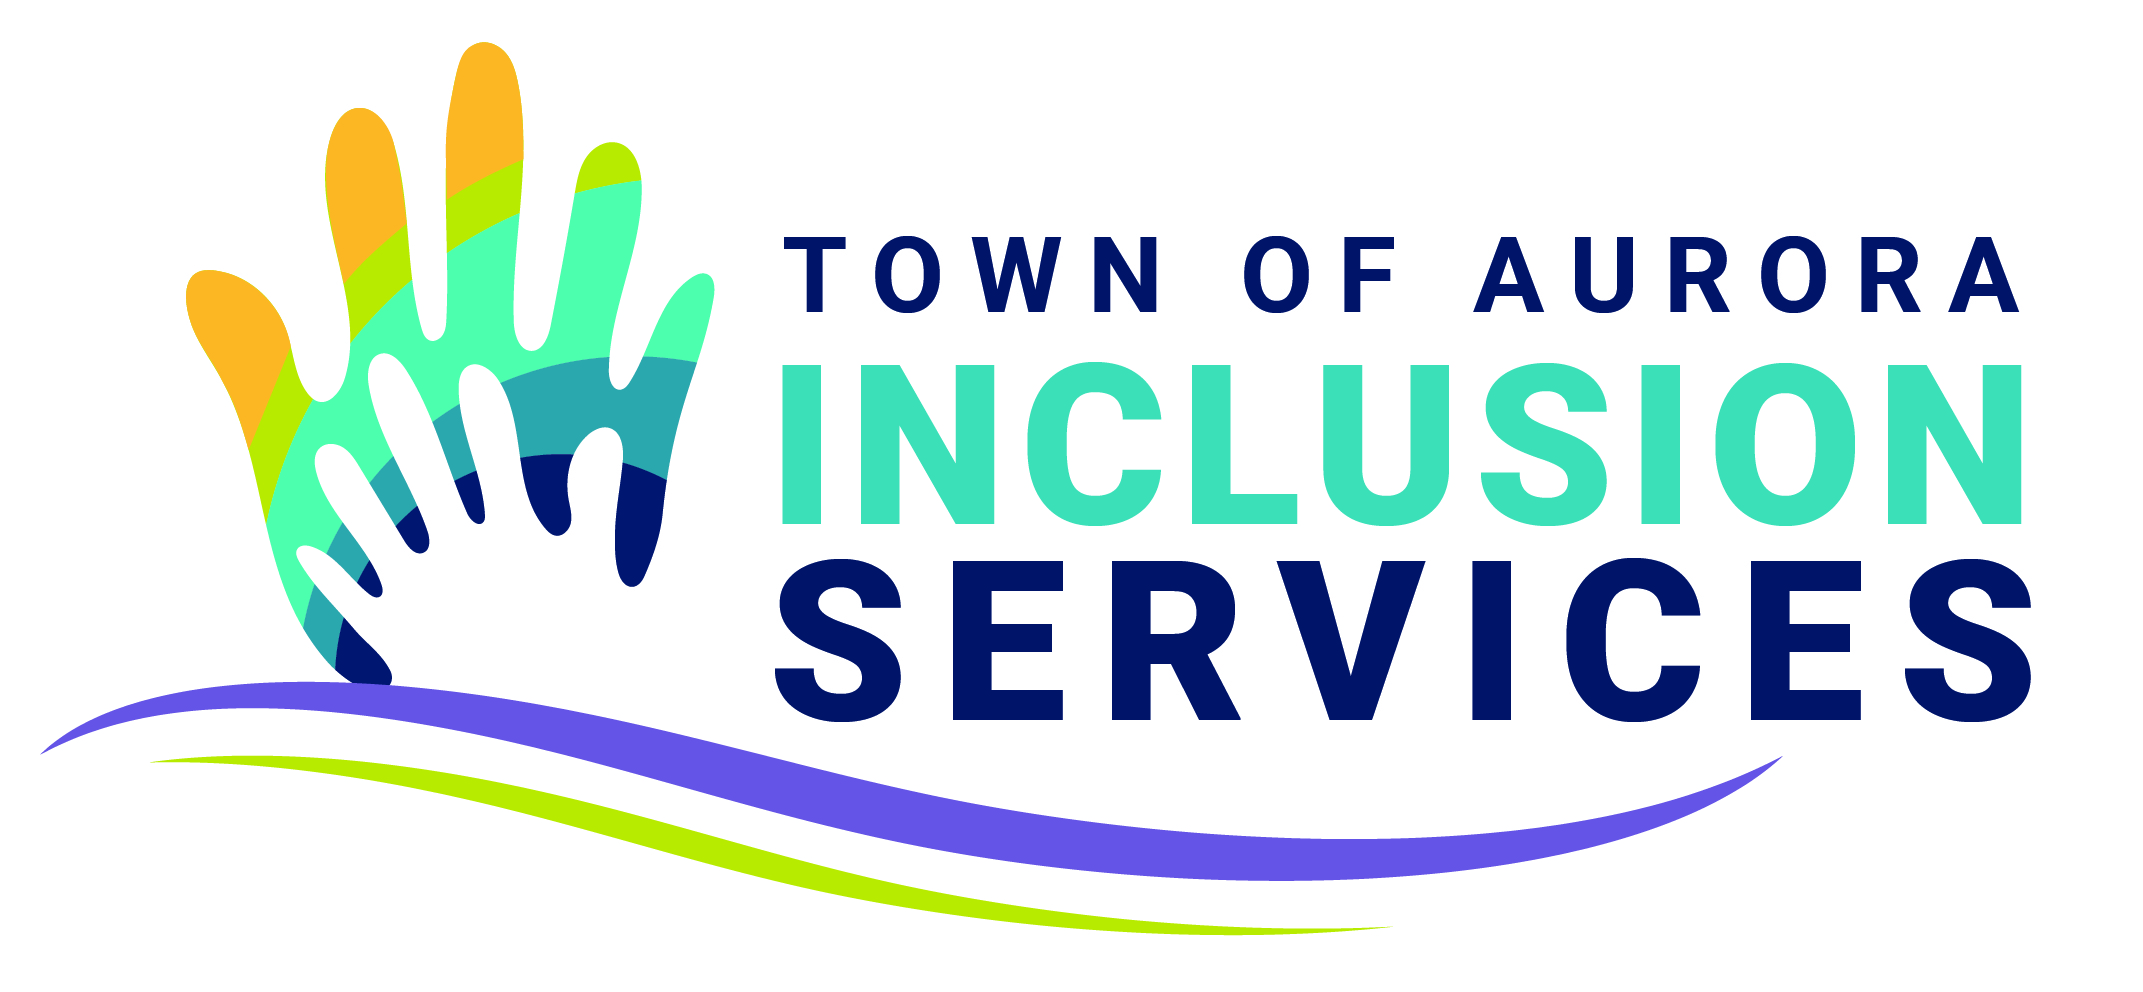 Inclusion services logo